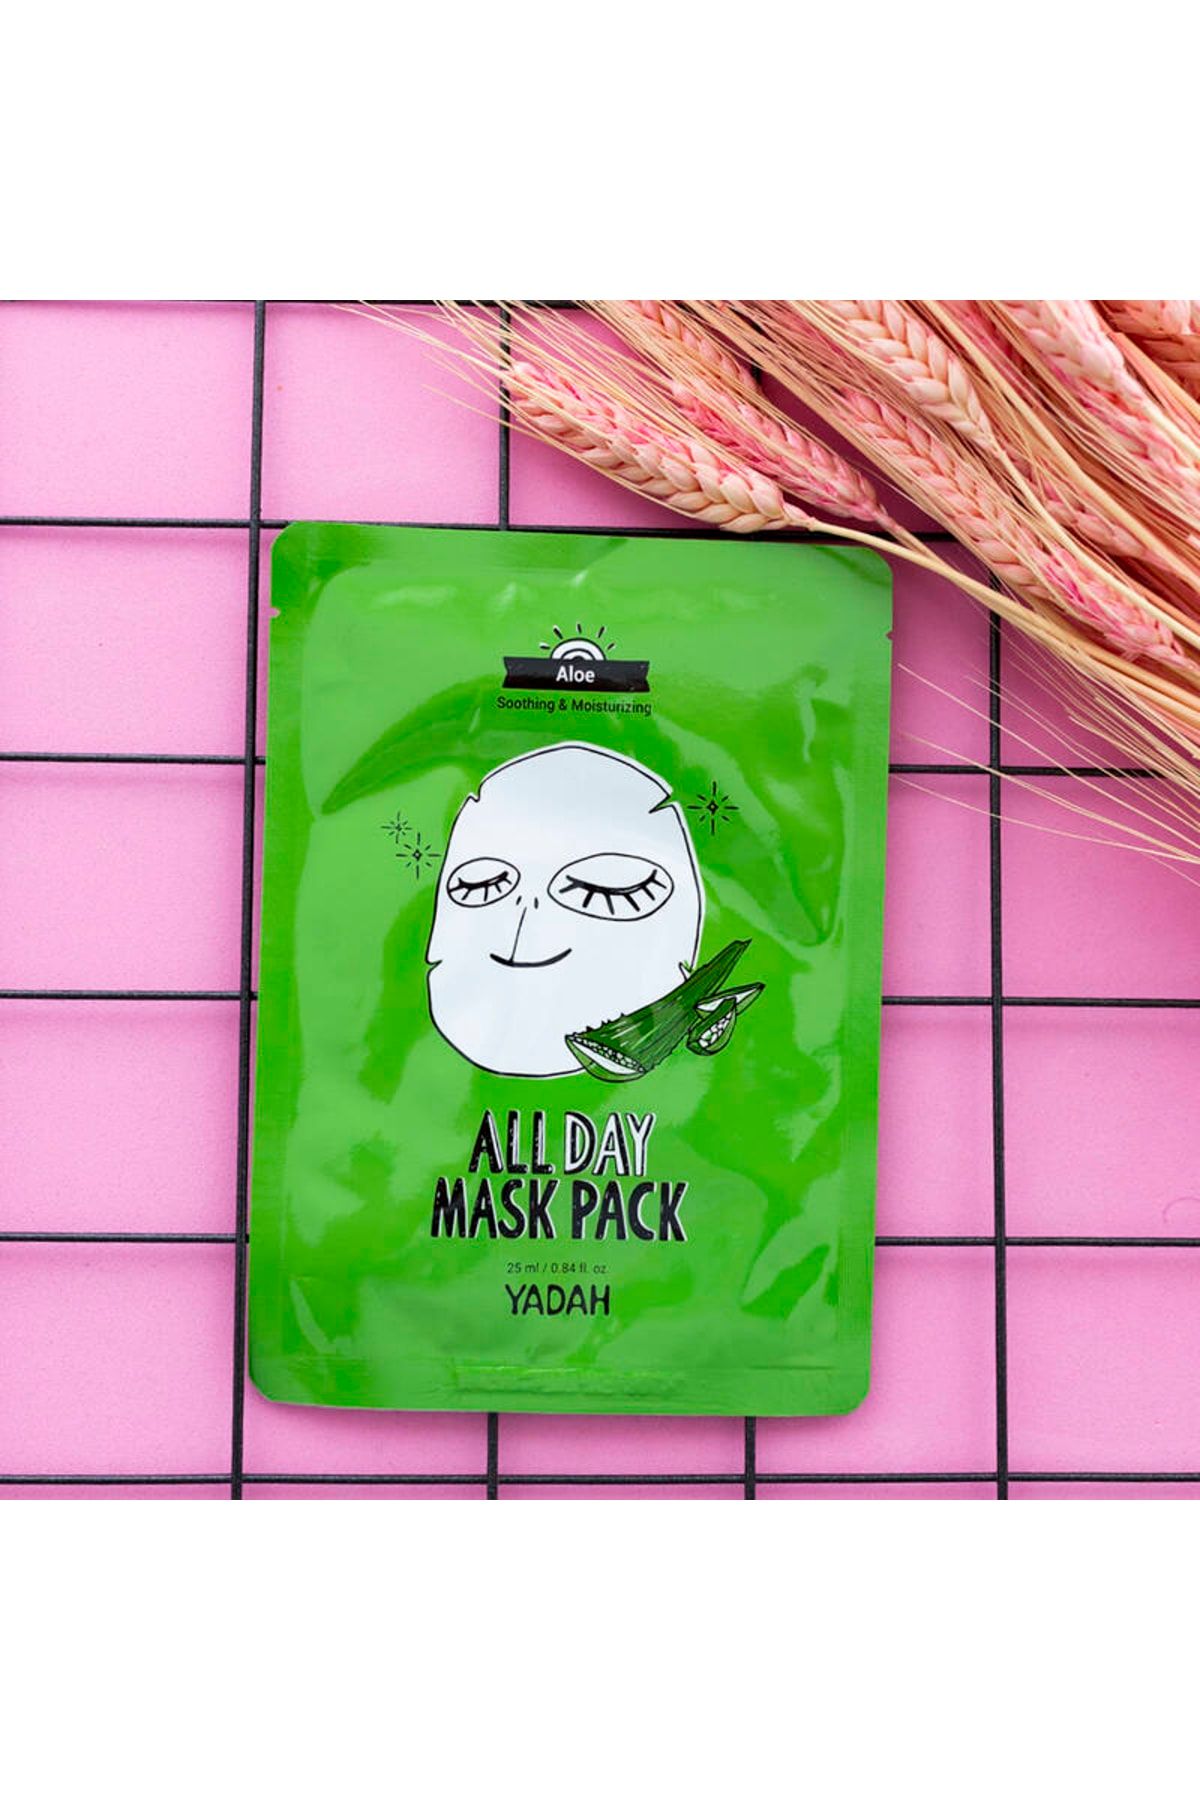 Miniso All Day Maske Pack - Aloe Vera